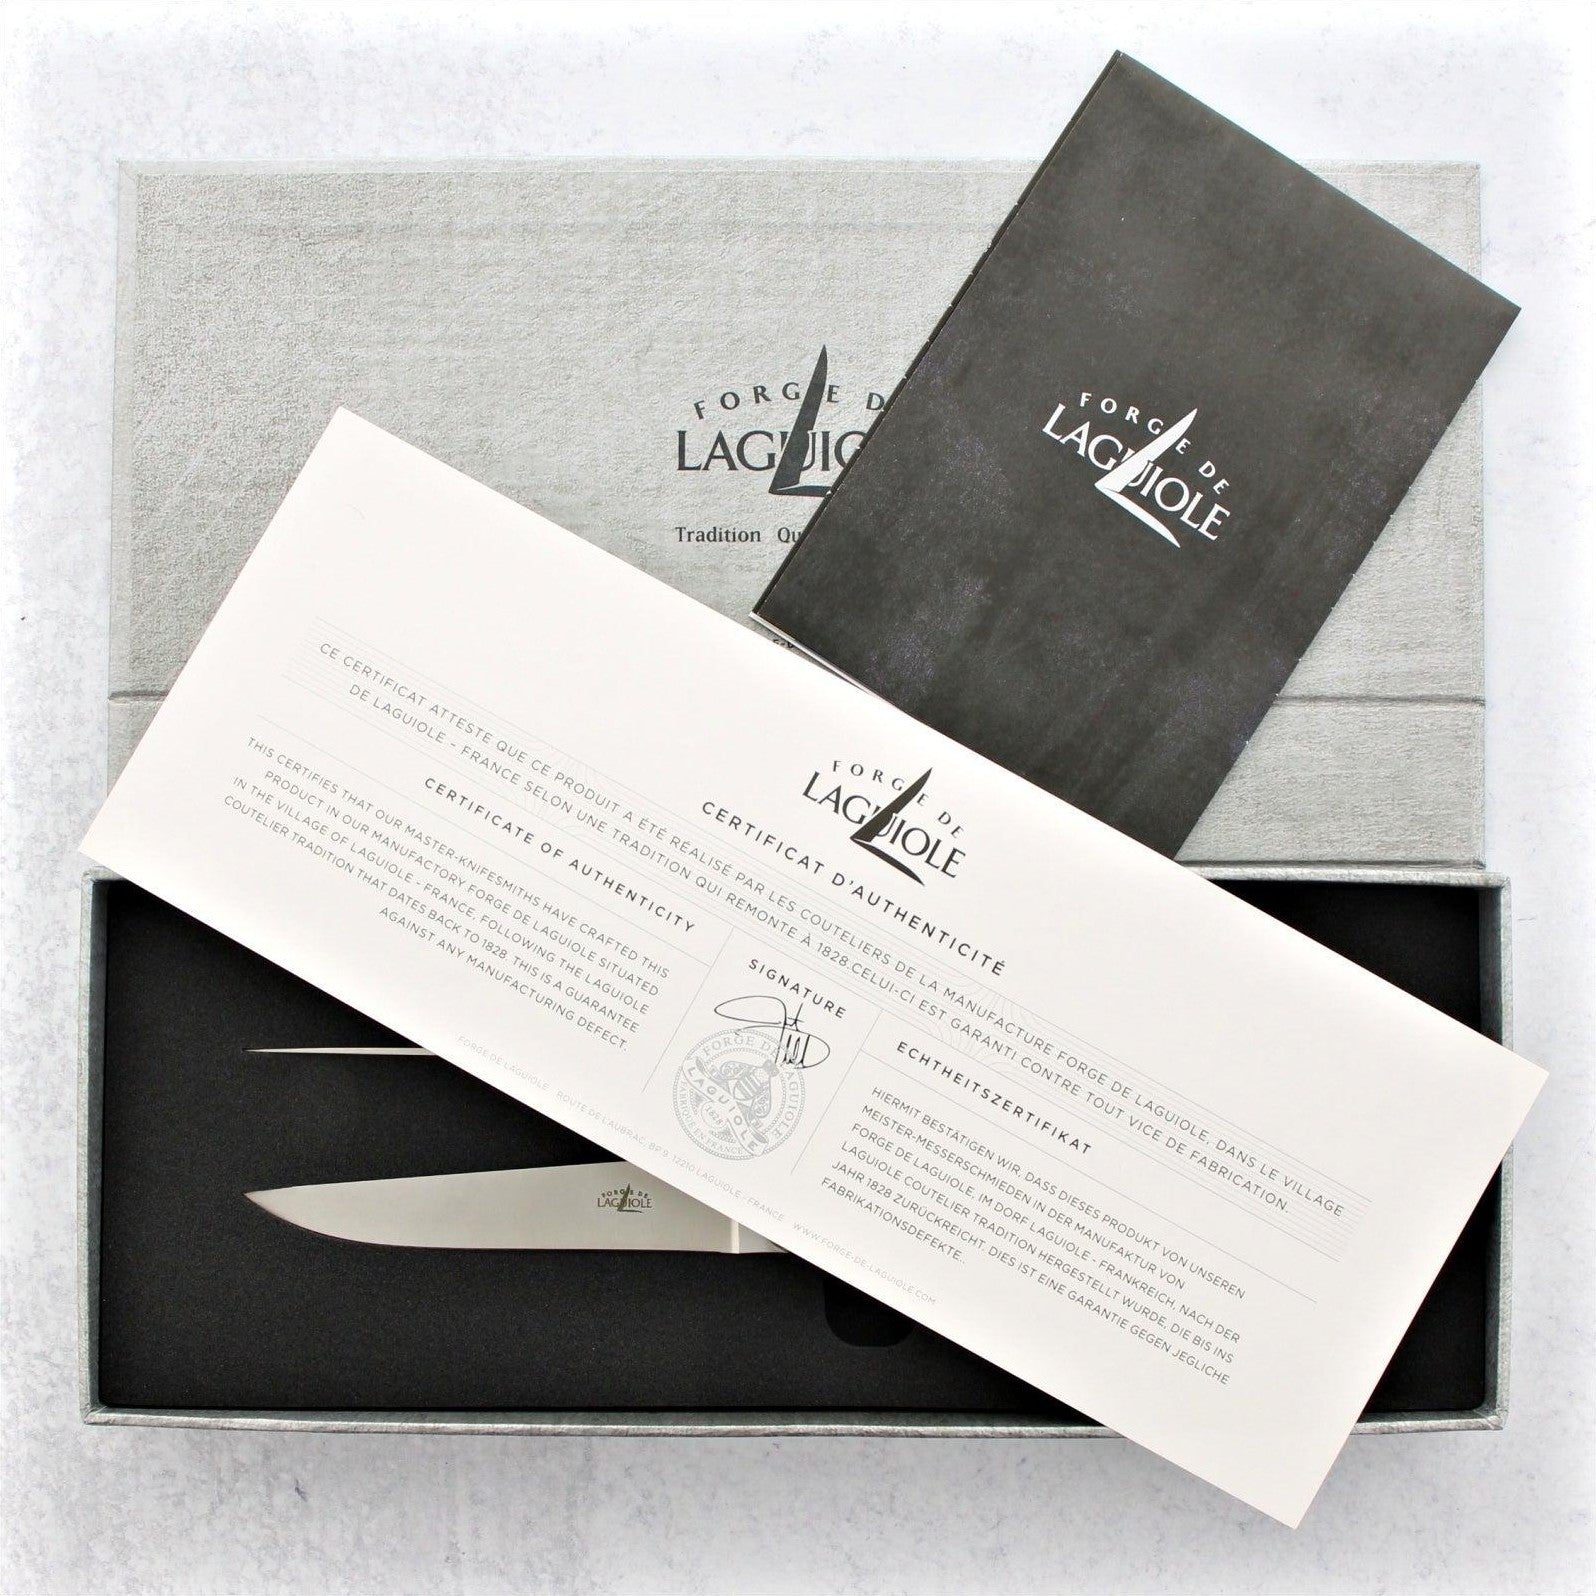 Christian Ghion Set of 6 Ash Tree Steak Knives - Forge de Laguiole USA